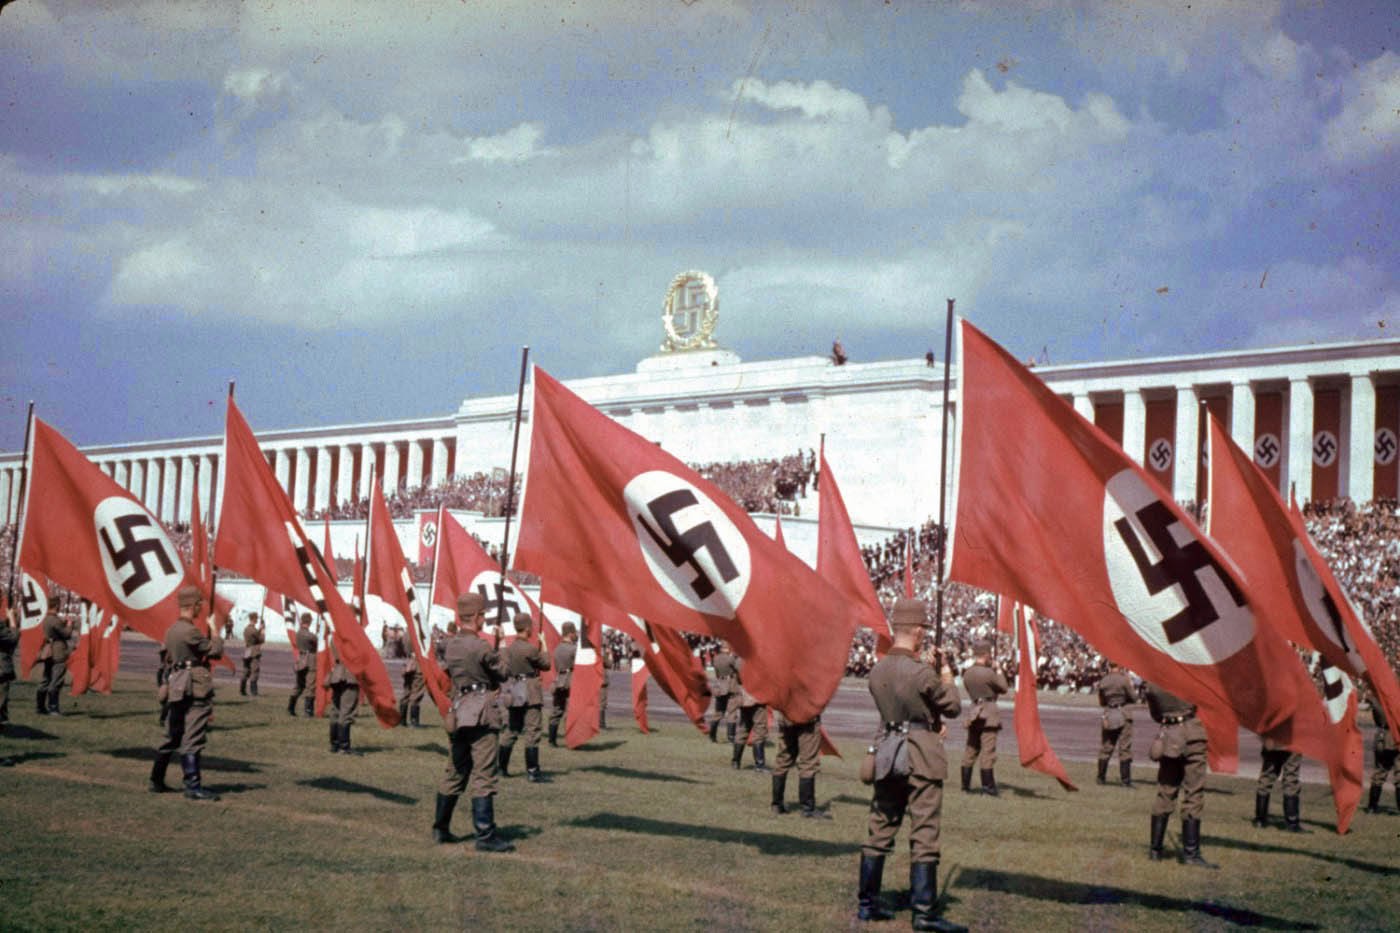 1937 Reich Party Congress, Nuremberg, Germany..jpg